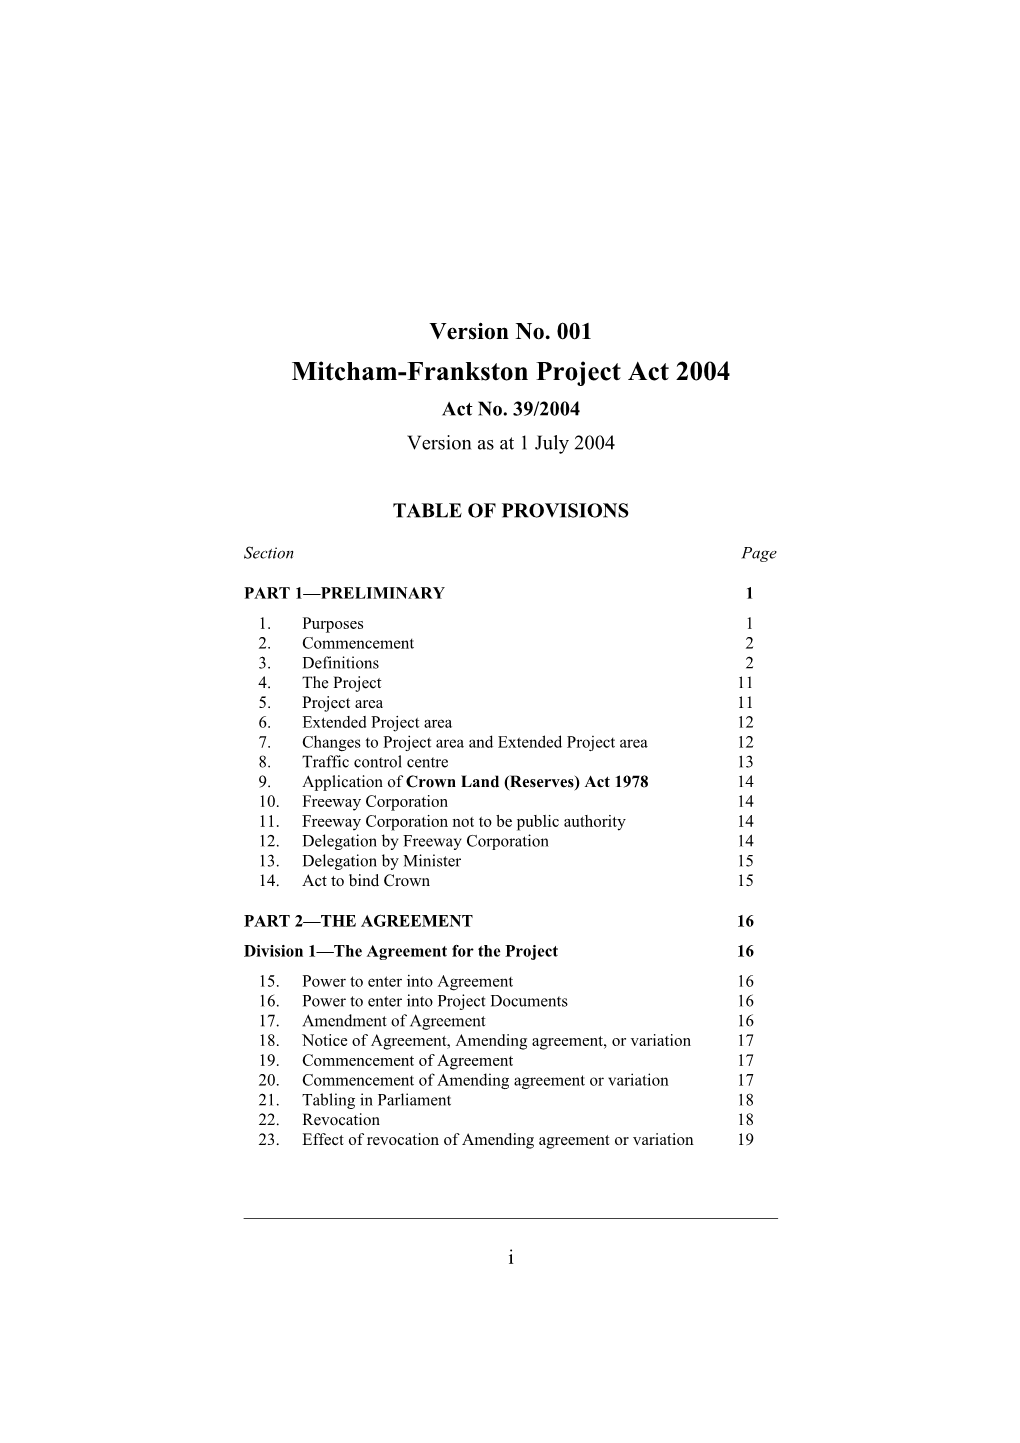 Mitcham-Frankston Project Act 2004